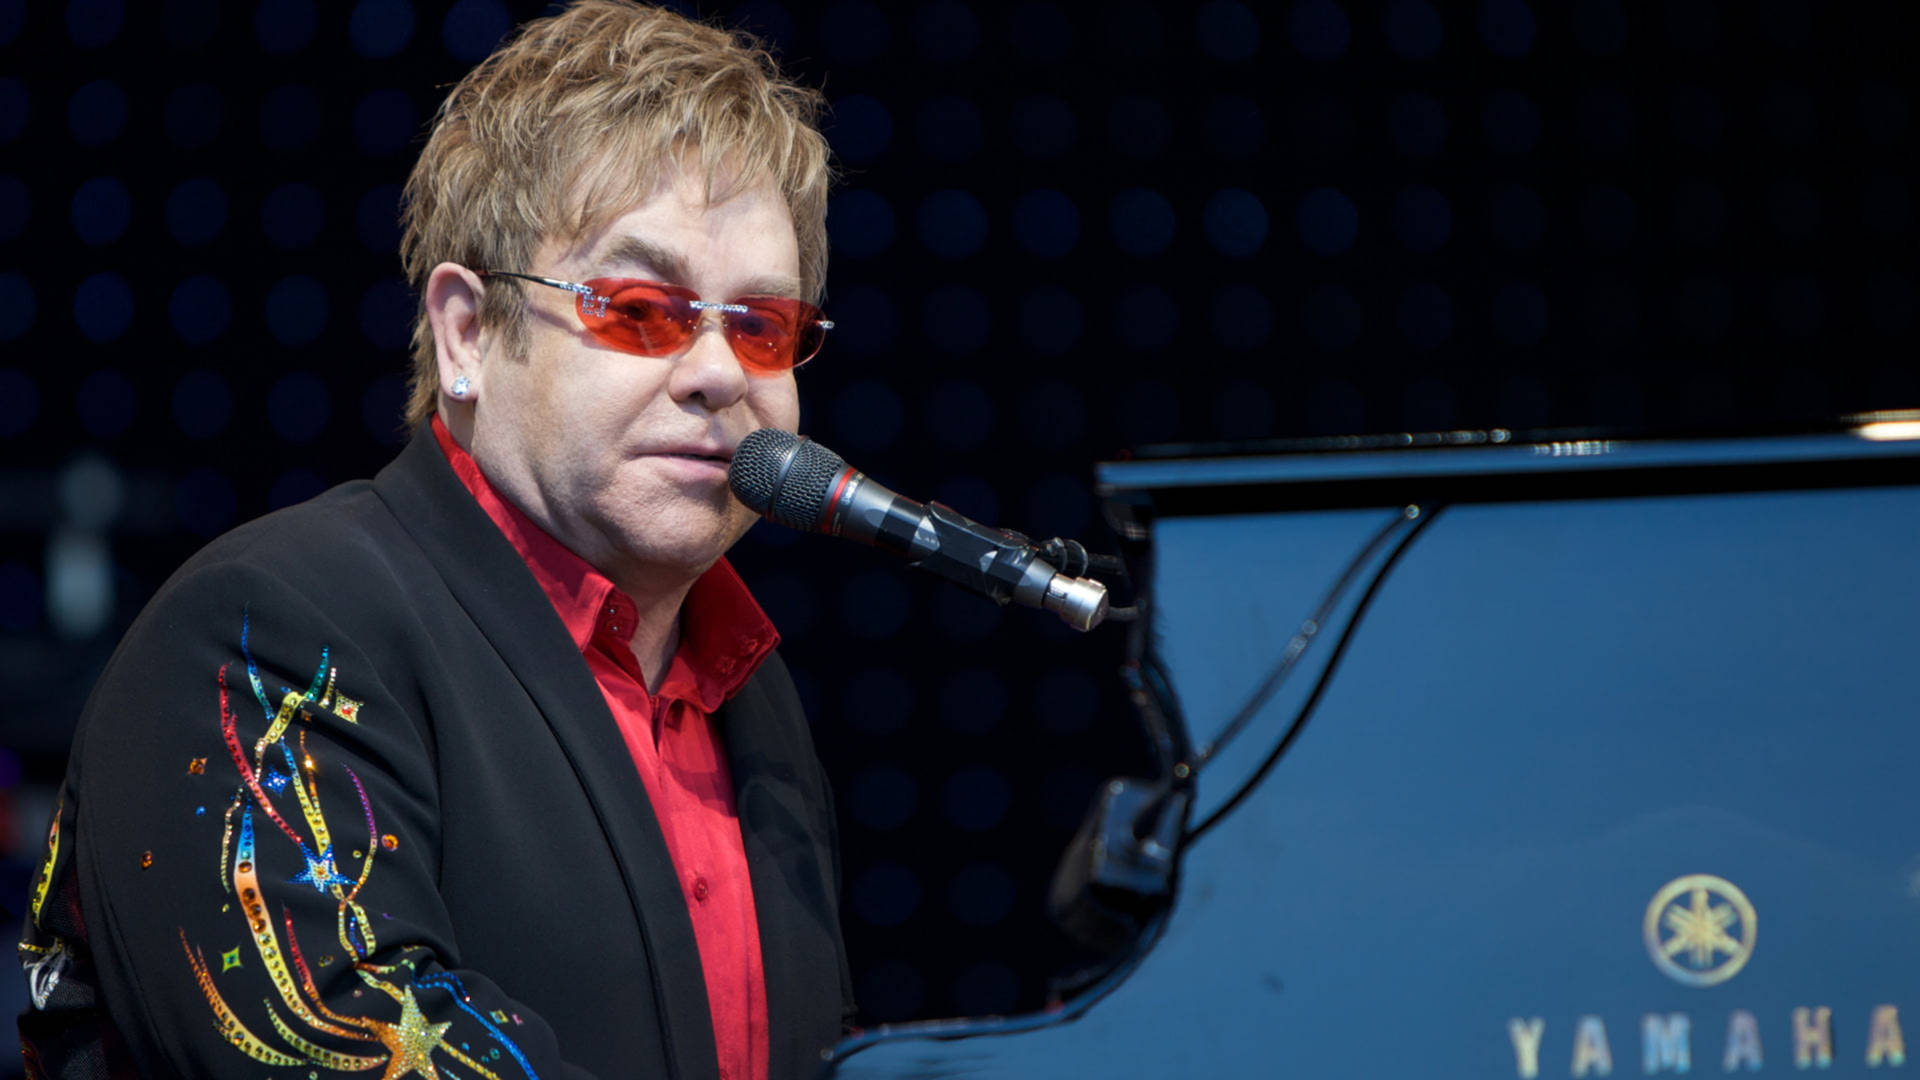 Elton John Live Performance Background